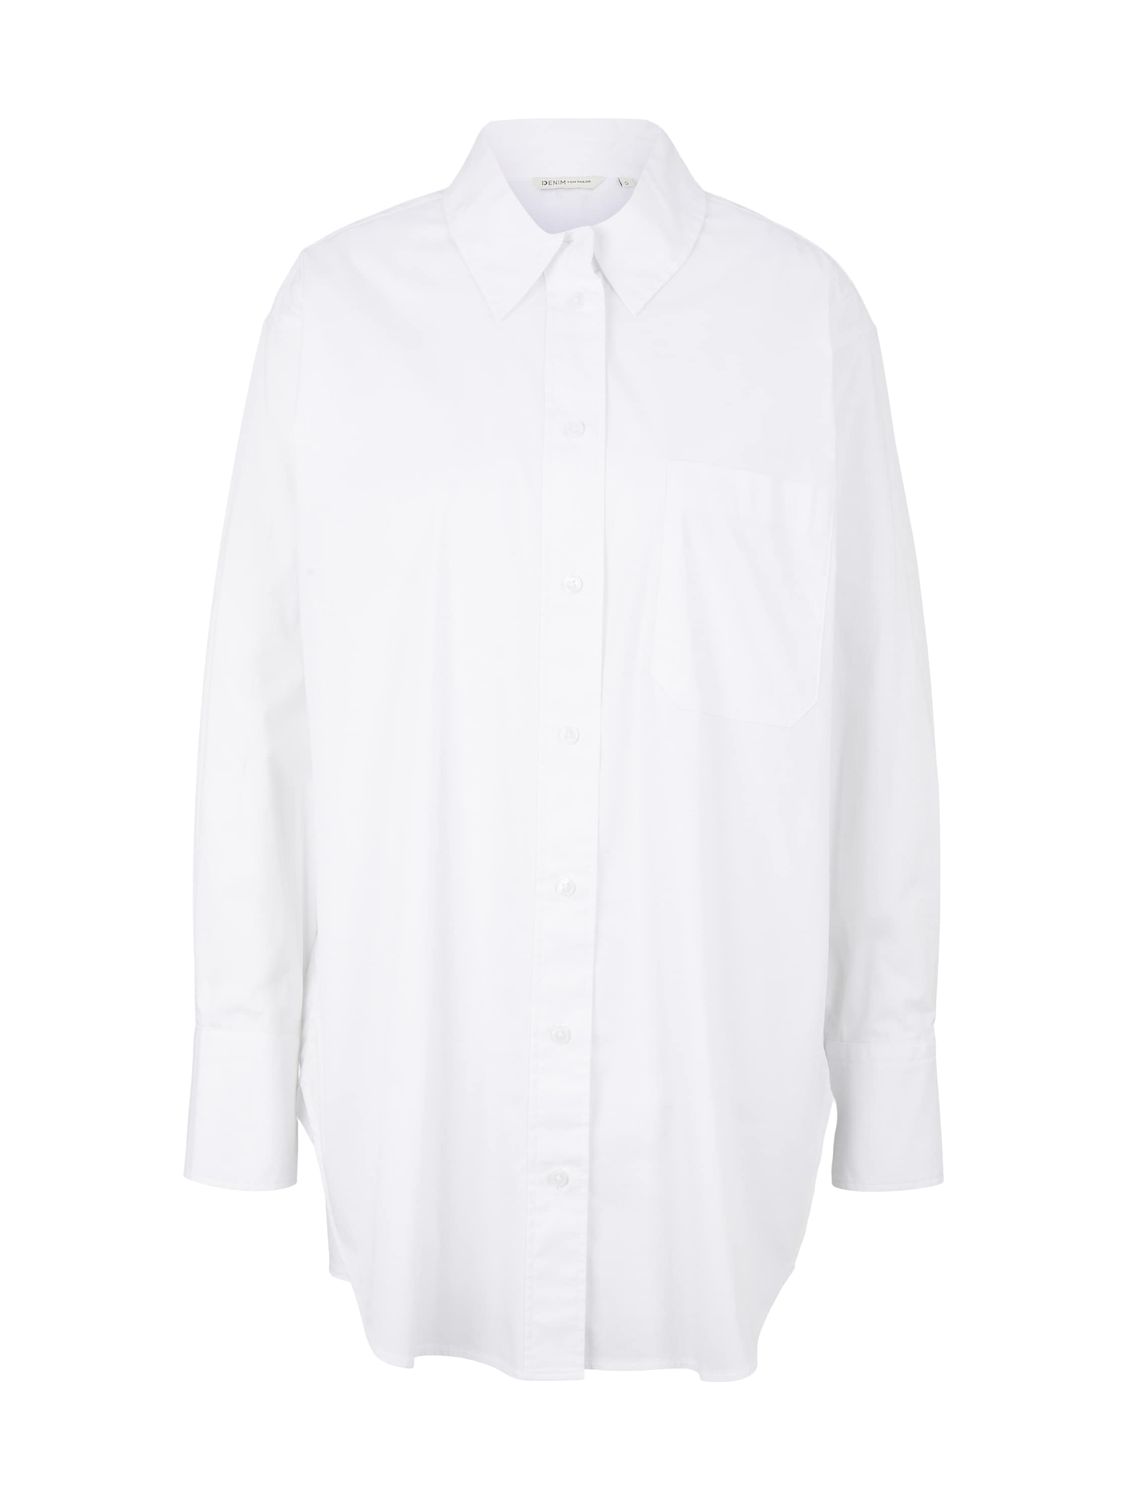 Блуза TOM TAILOR Denim CHEST POCKET, белый футболка tom tailor размер l белый голубой